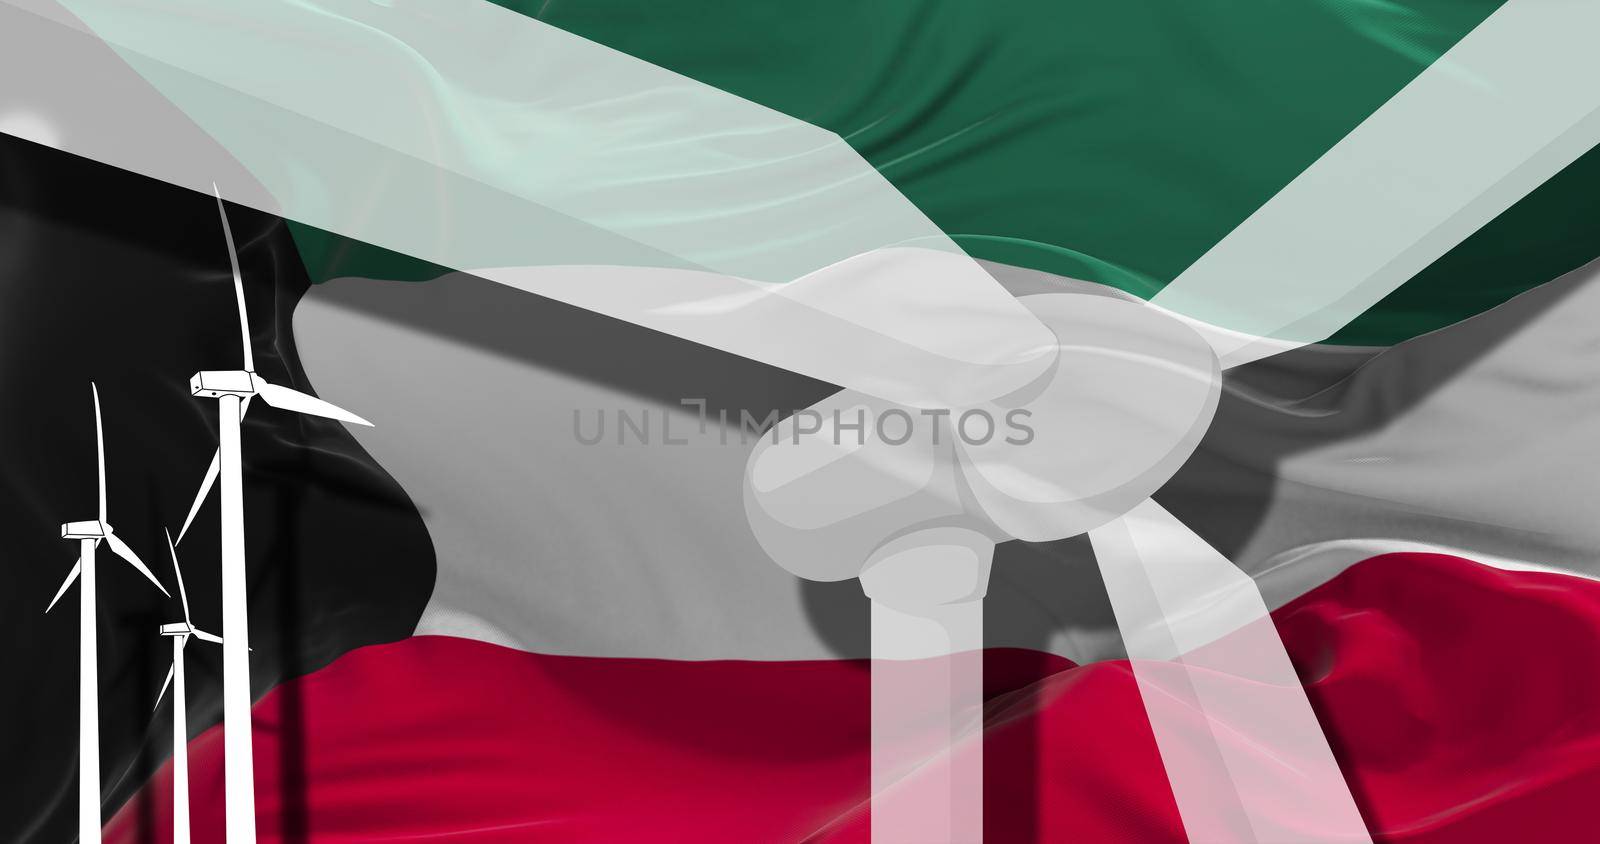 Wind turbines on background of Kuwait flag. sustainable development, renewable energy, national alternative energy environment concept. 3d illustration.